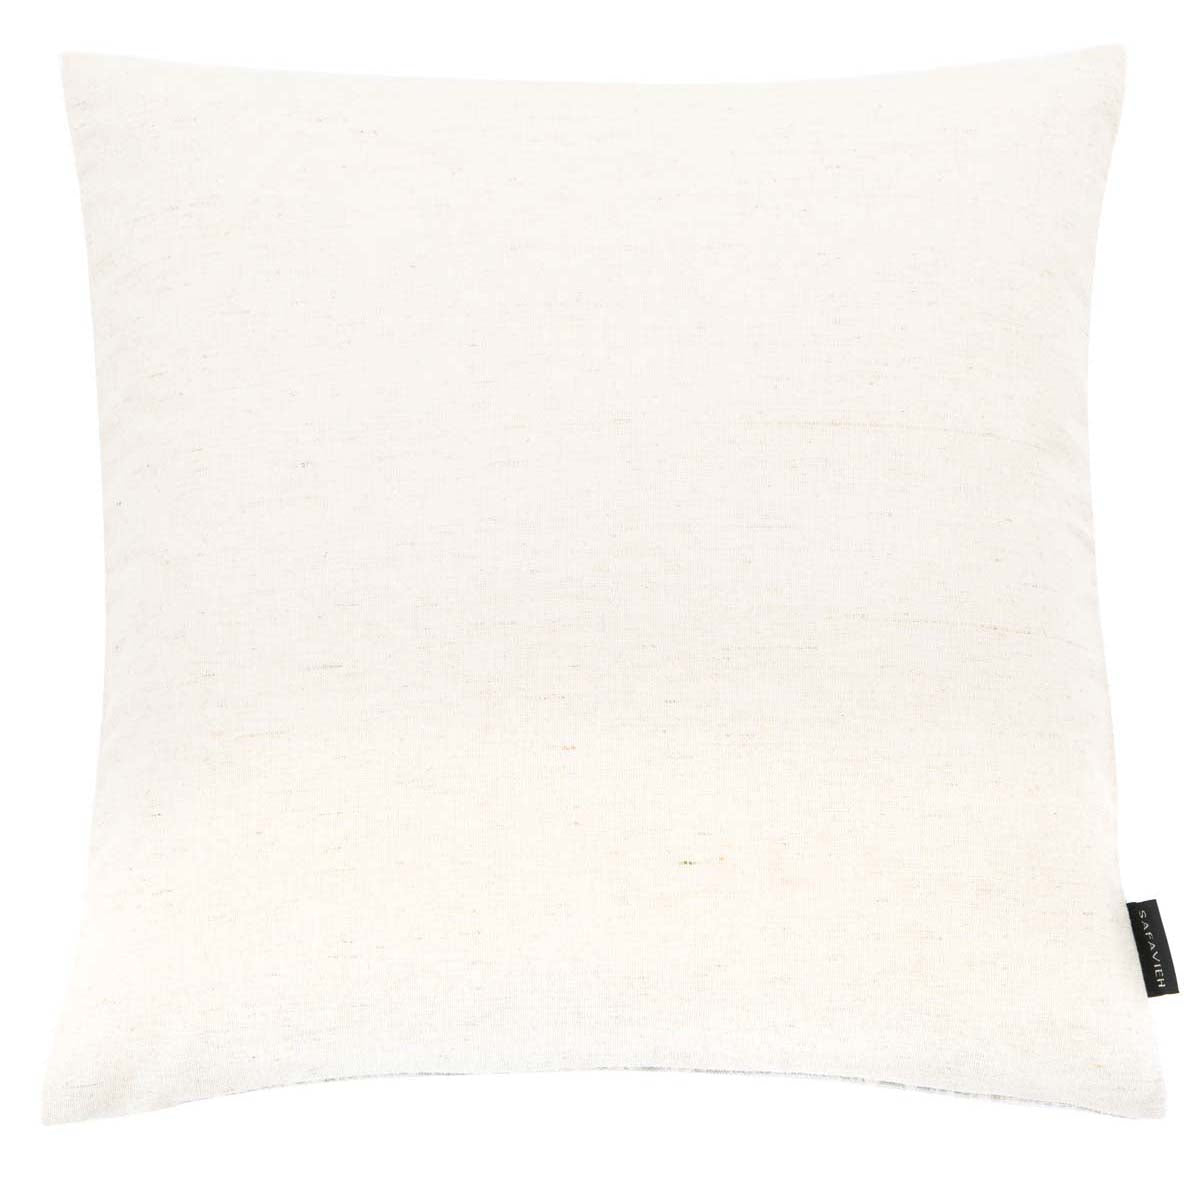 Safavieh Letara Pillow , PLS7182 - Silver / White